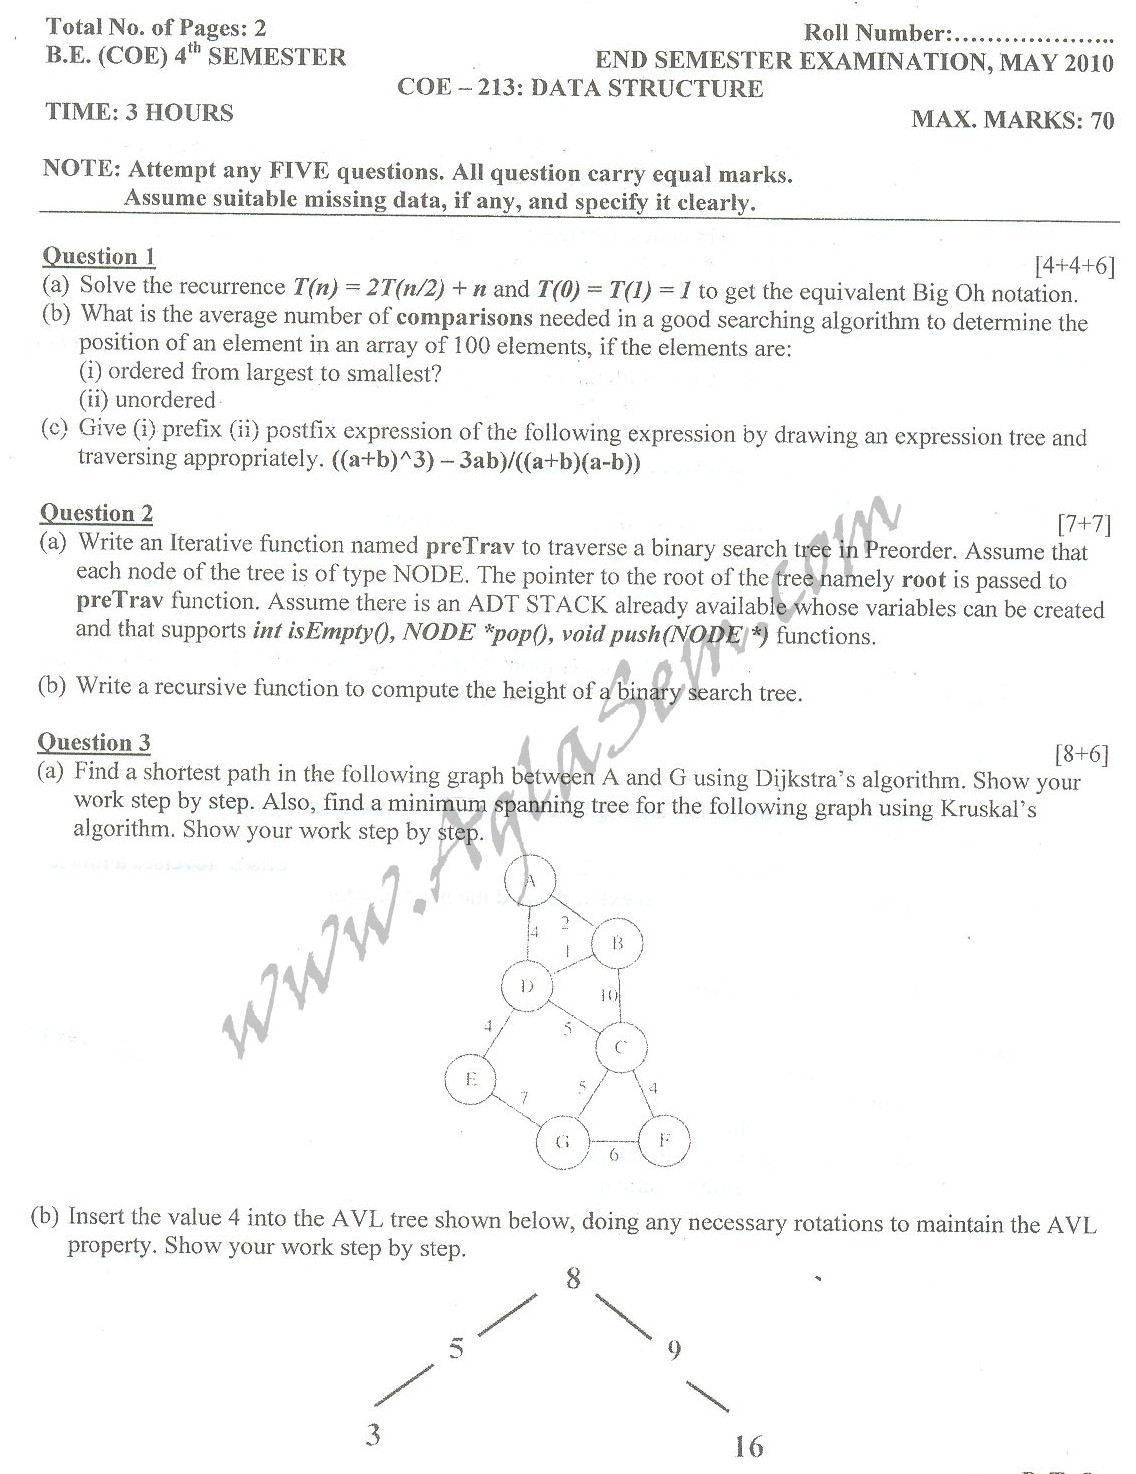 DTU Question Papers 2010  4 Semester - End  Sem - COE-213